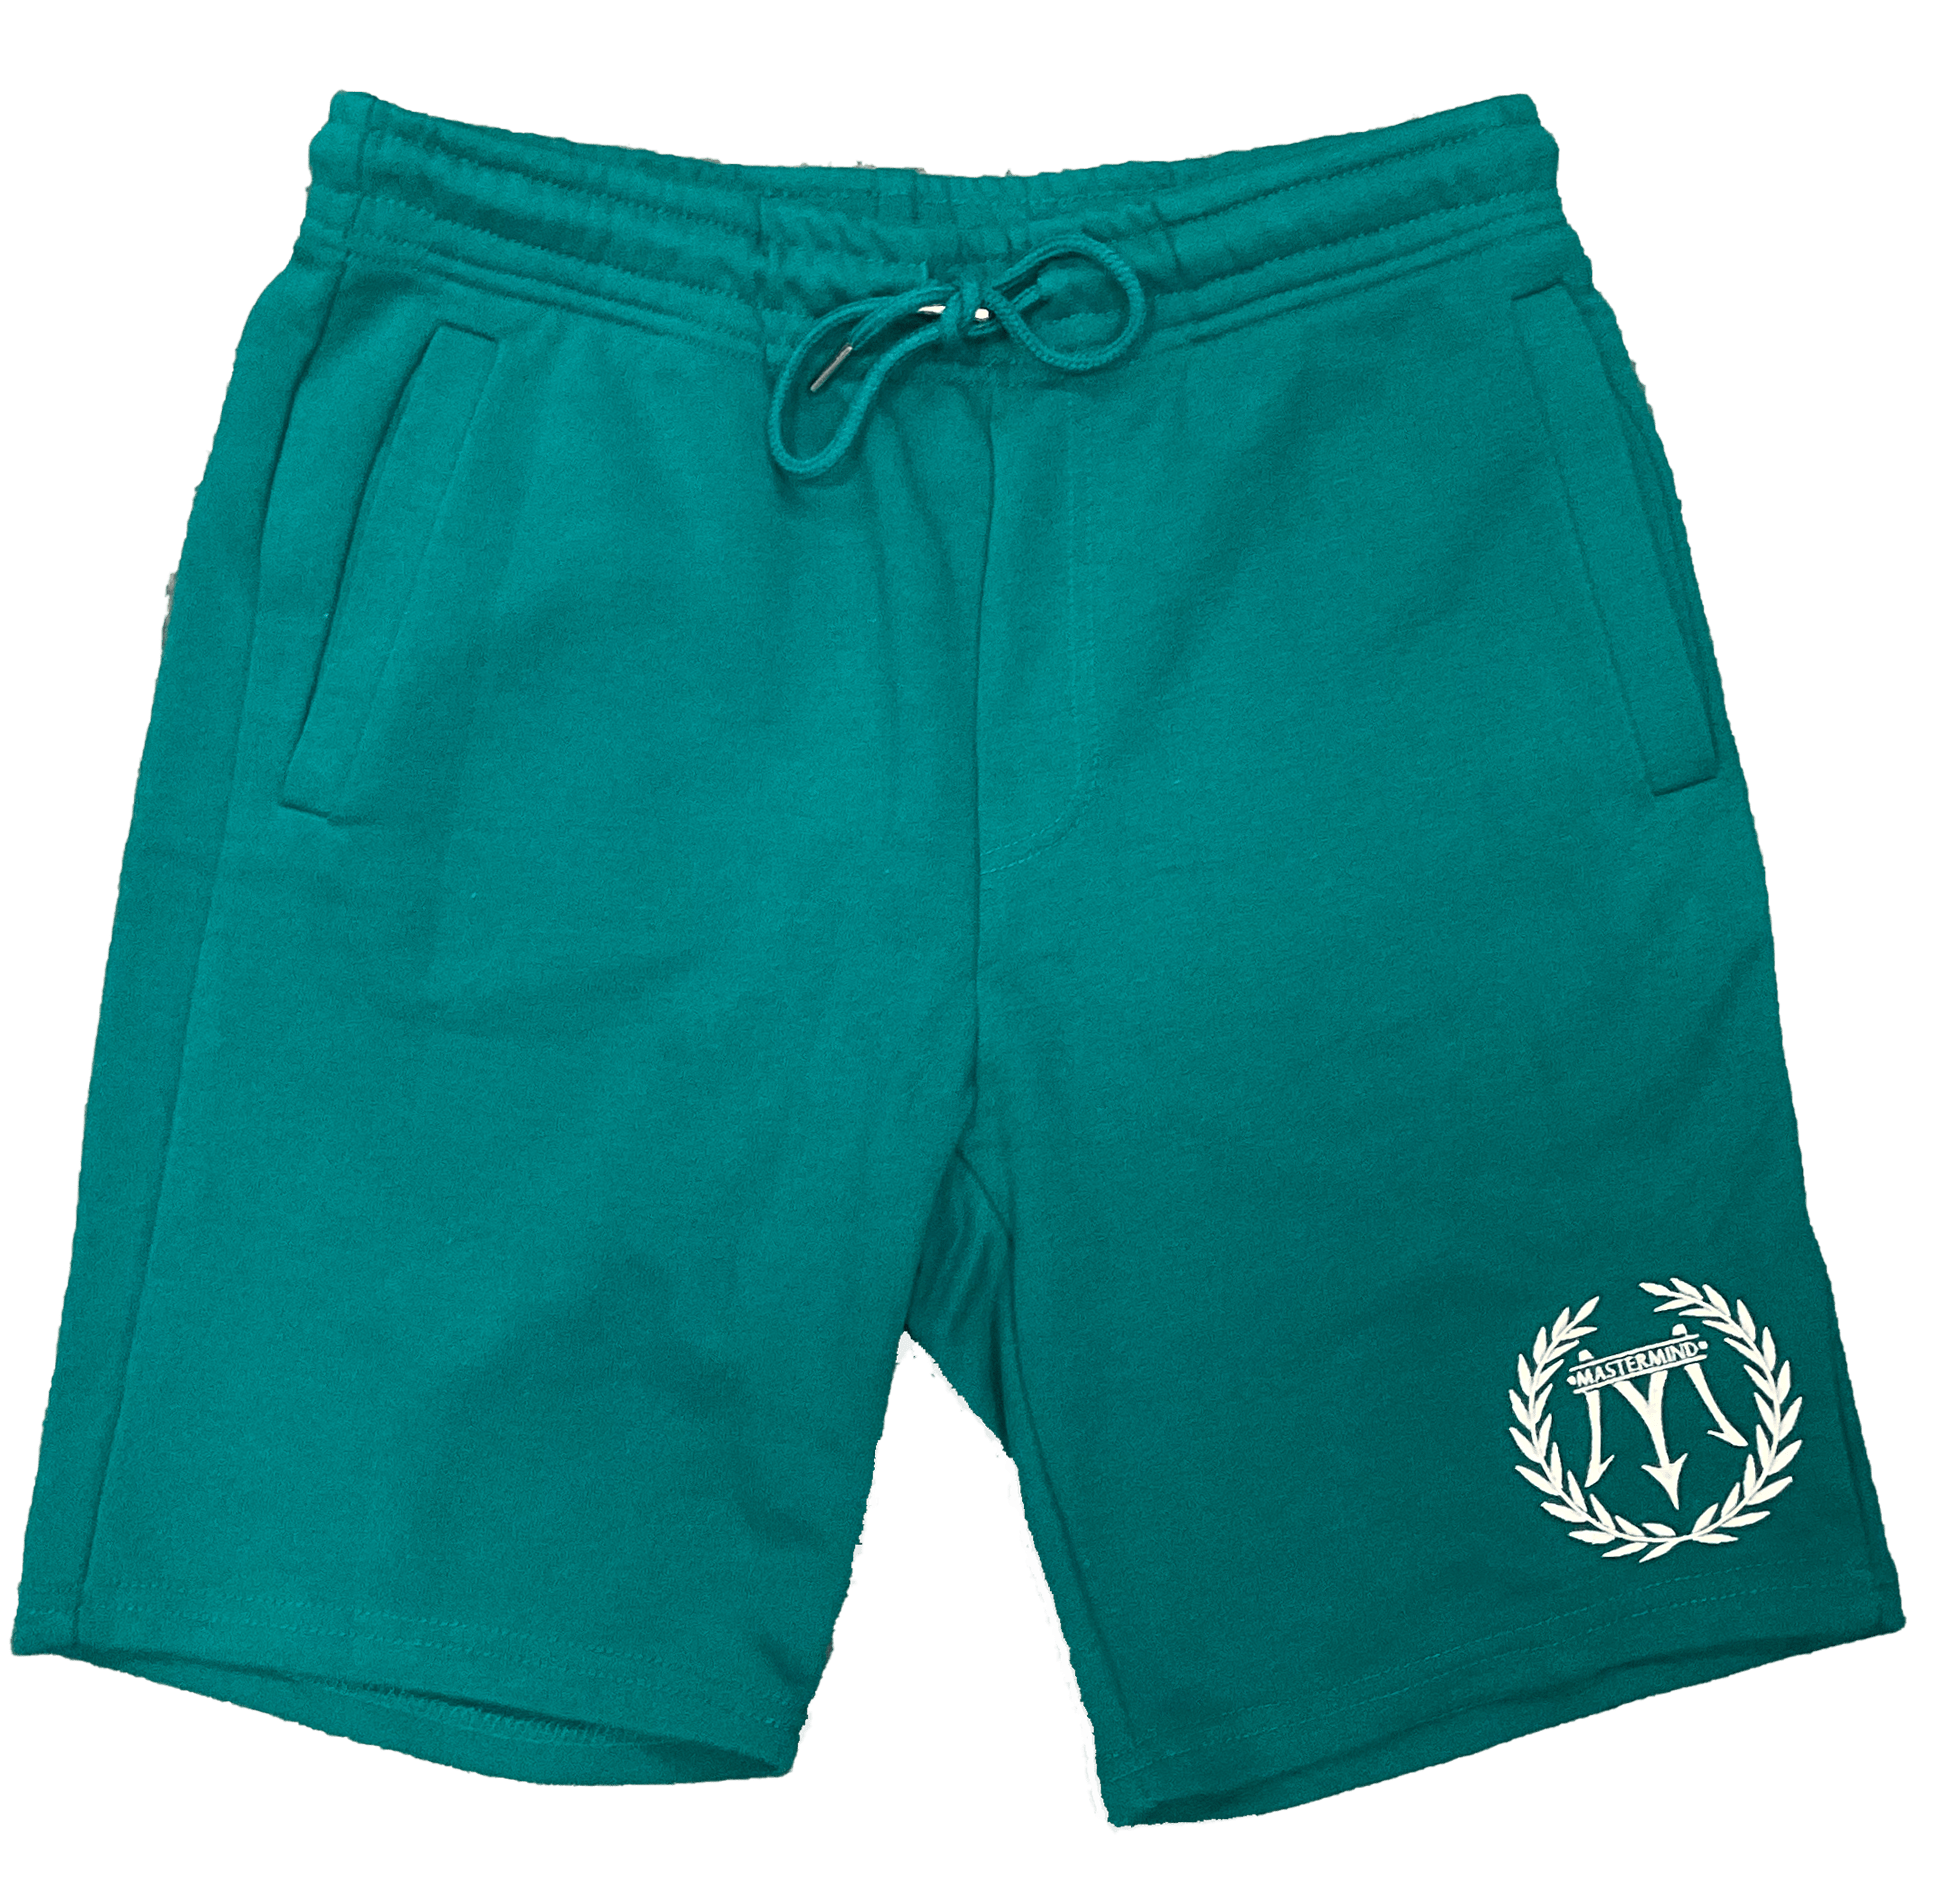 Mastermind315 S Forest Crest Shorts.